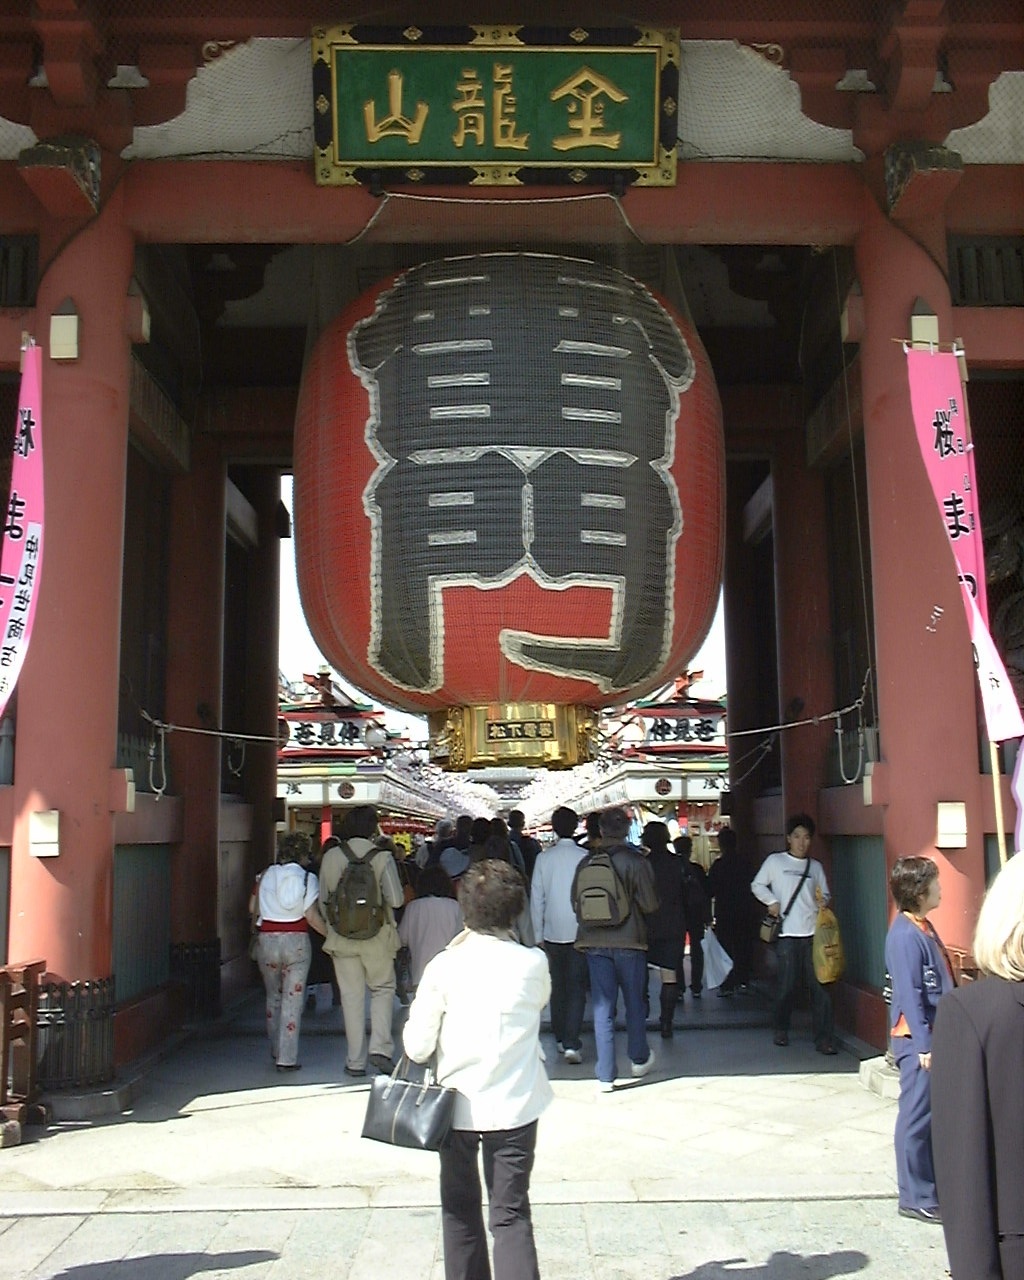 004-japan-asakusa-sensoji-tempel-laterne